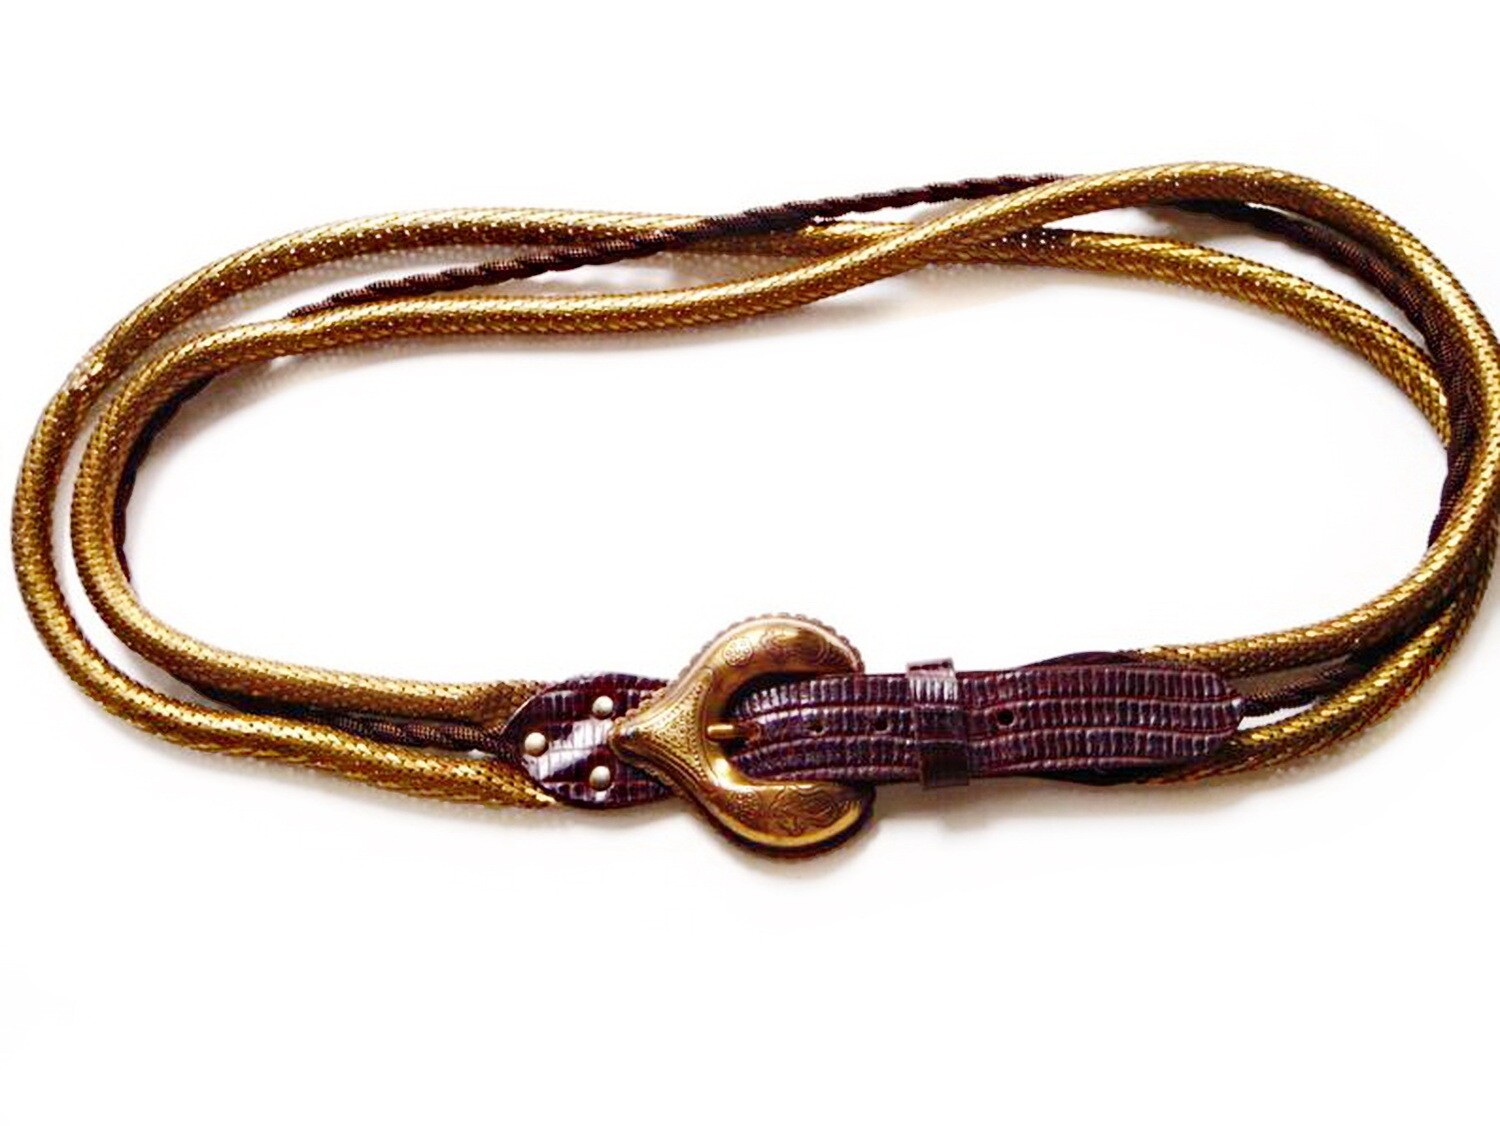 Vintage French Brass Snake Scale Belt Boho High Fashion Accessory